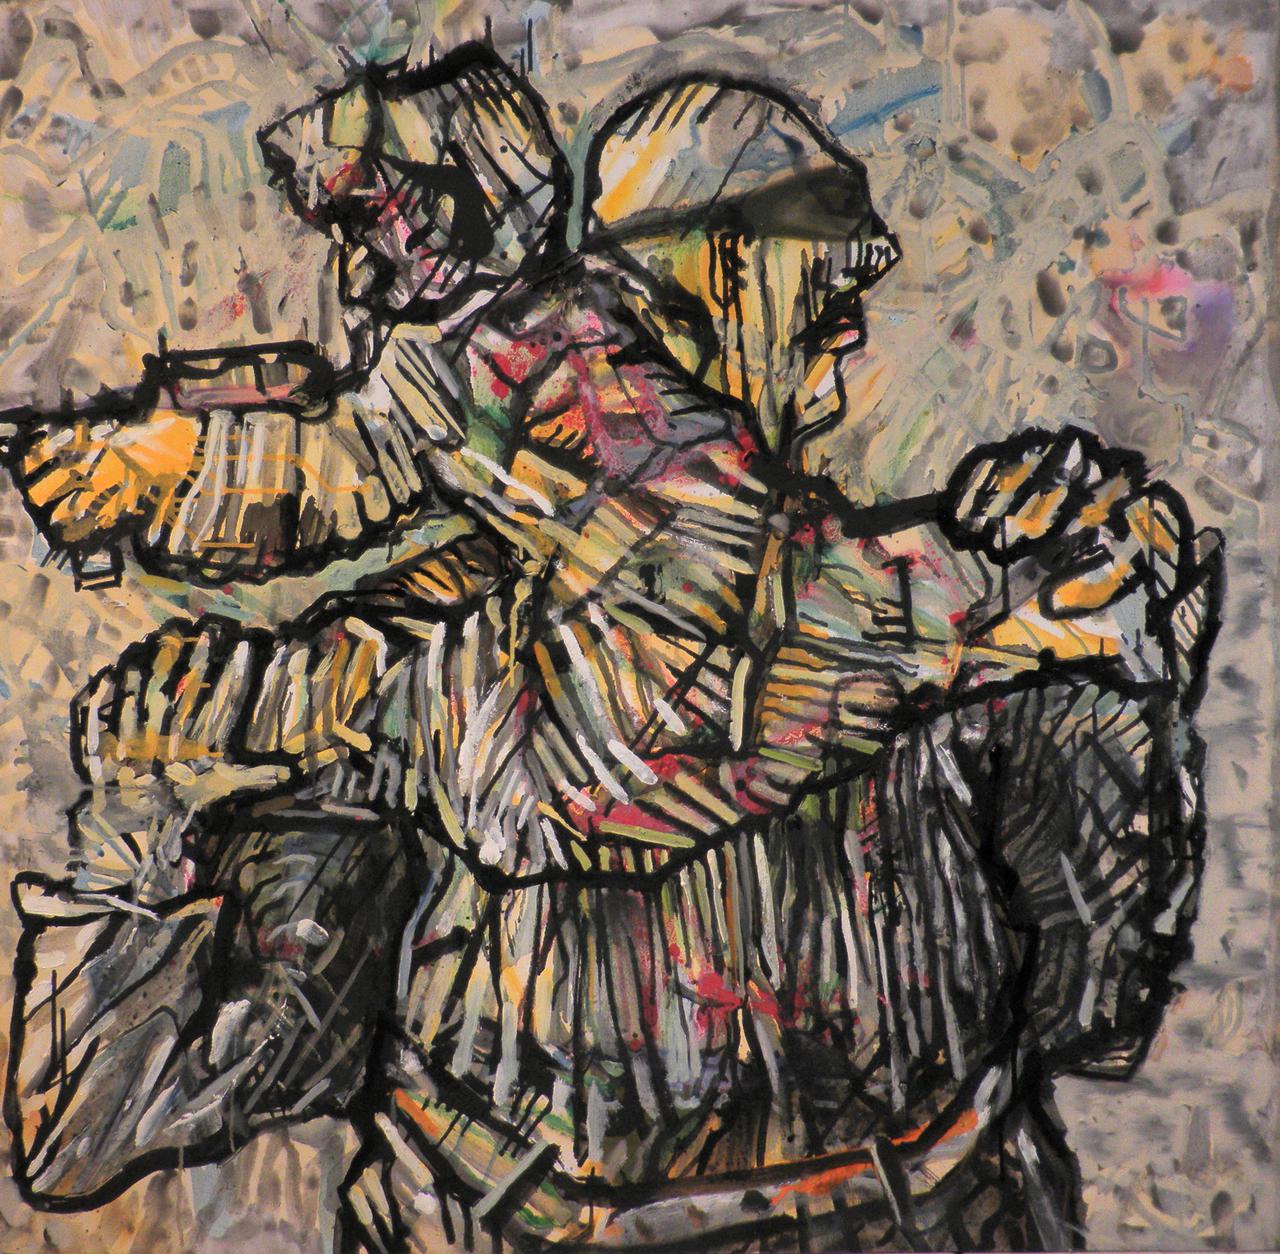 alt=Haralabos Katsatsidis, Man and child in war zone, 1 m x 1 m, oil on canvas, 2018